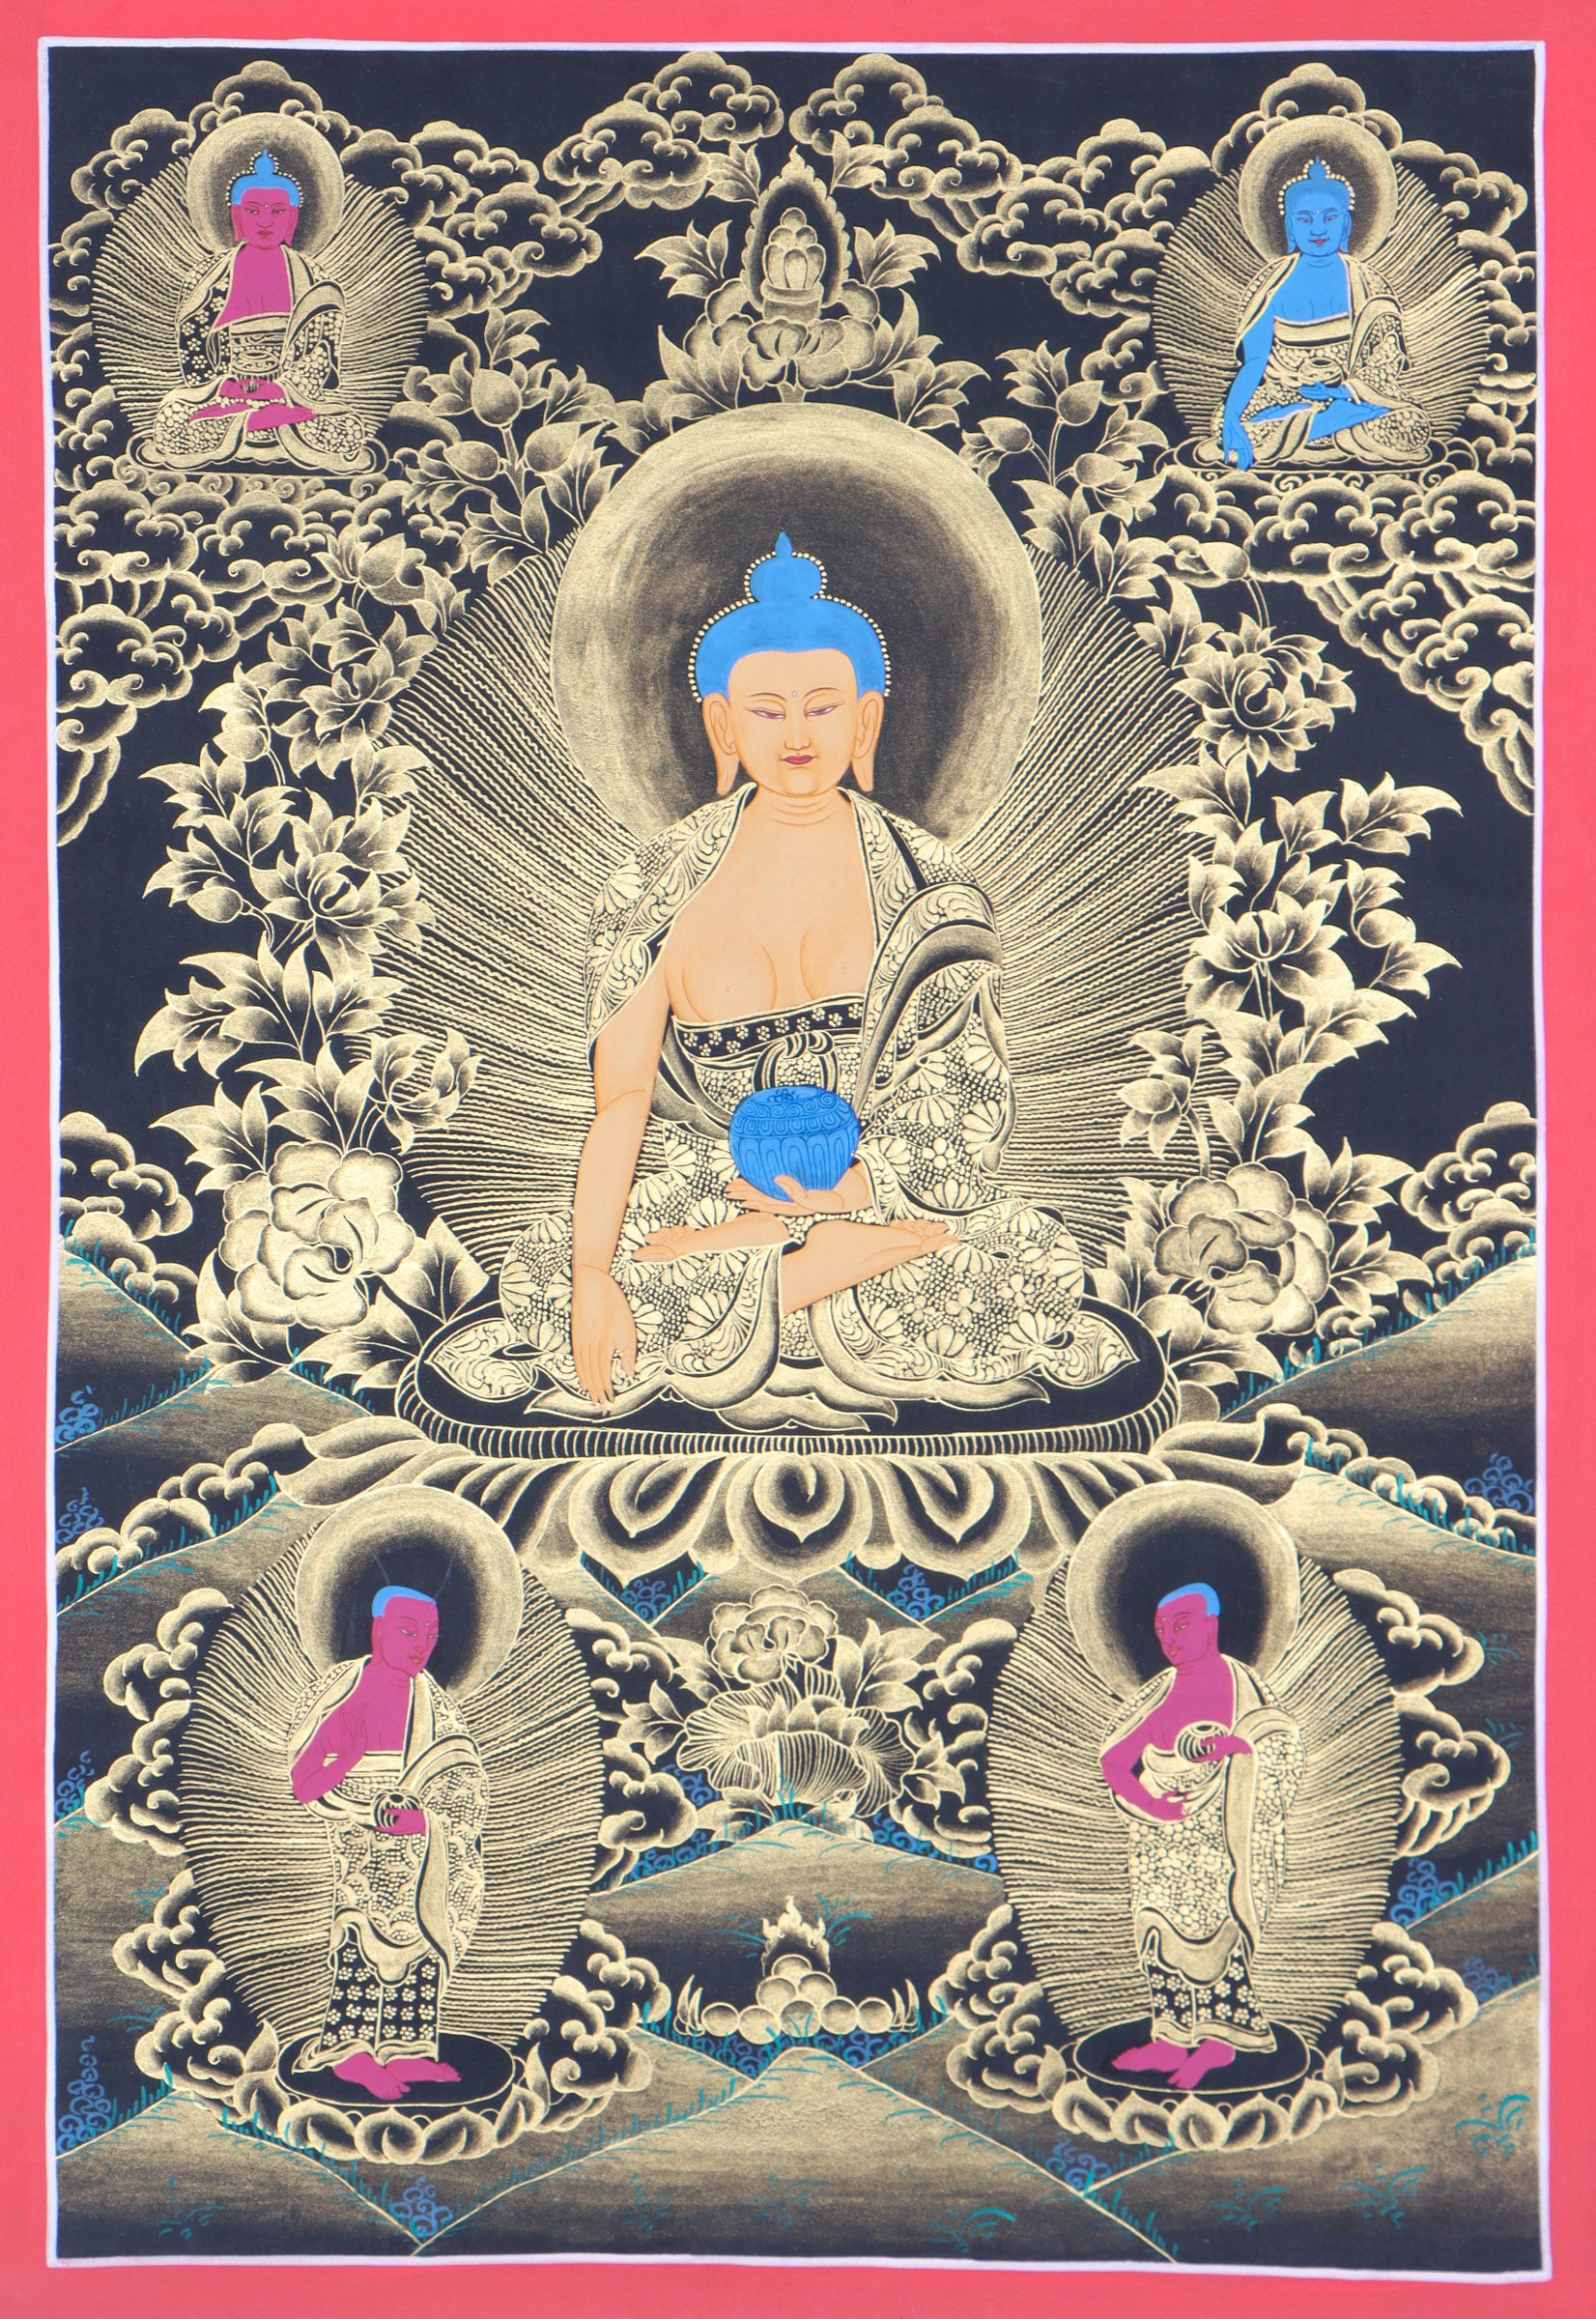 Shakyamuni Buddha Thangka Painting for meditation and reflective activities. 